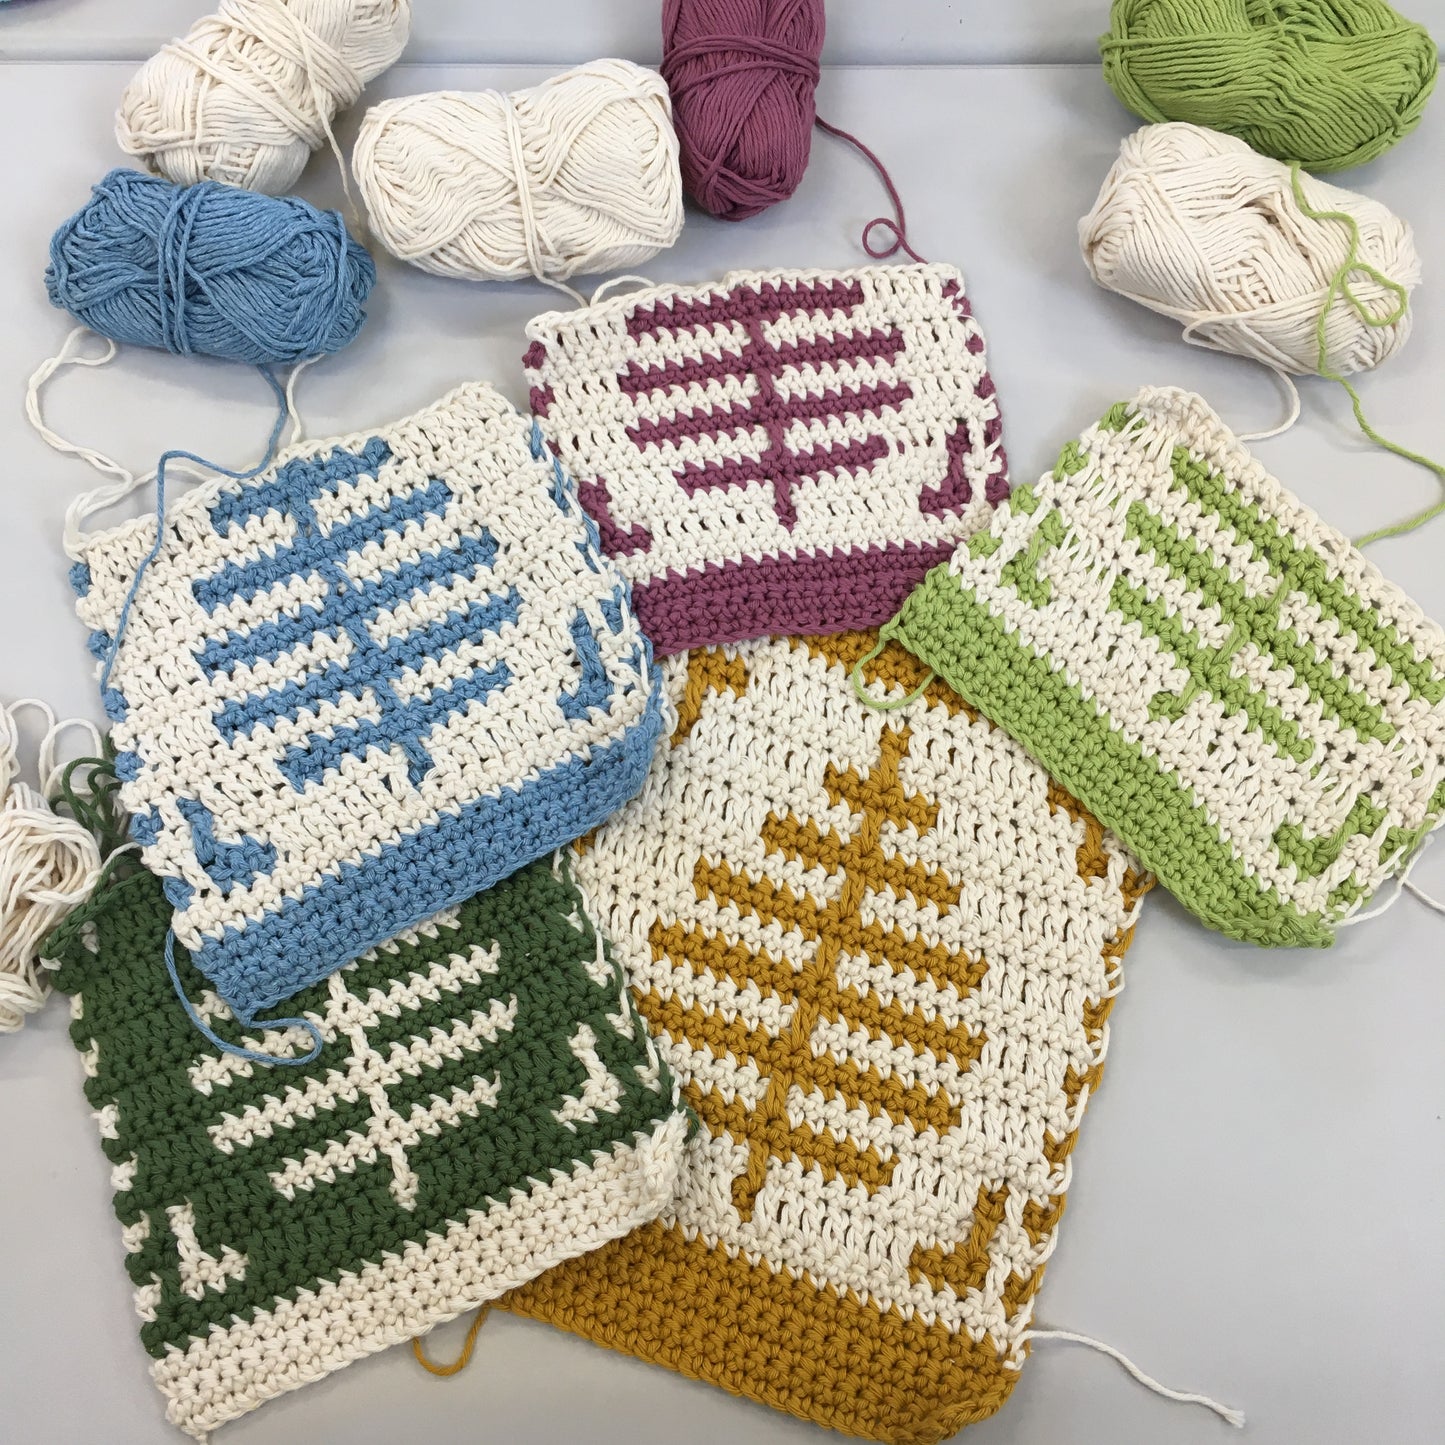 Mosaic Crochet Workshop - Friday 17th November